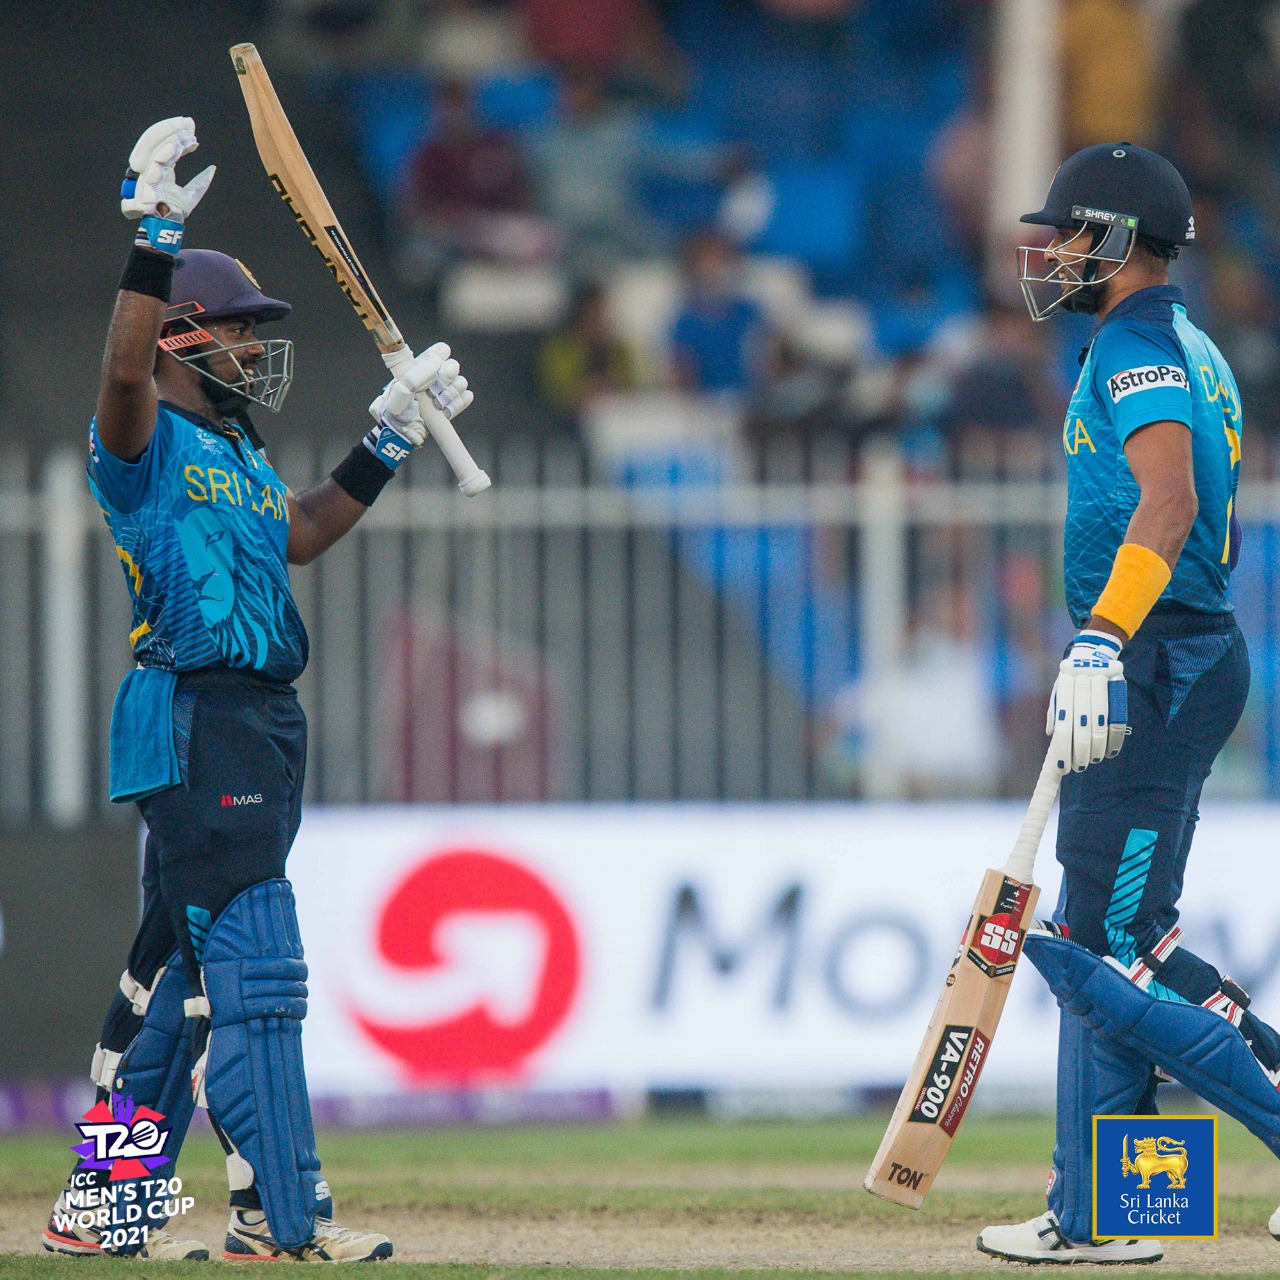 Charith Asalanka crash lands with unbeaten 80, Bhanuka Rajapaksa explosive 53 in Sri Lanka’s 5-wicket super assault on Bangladesh